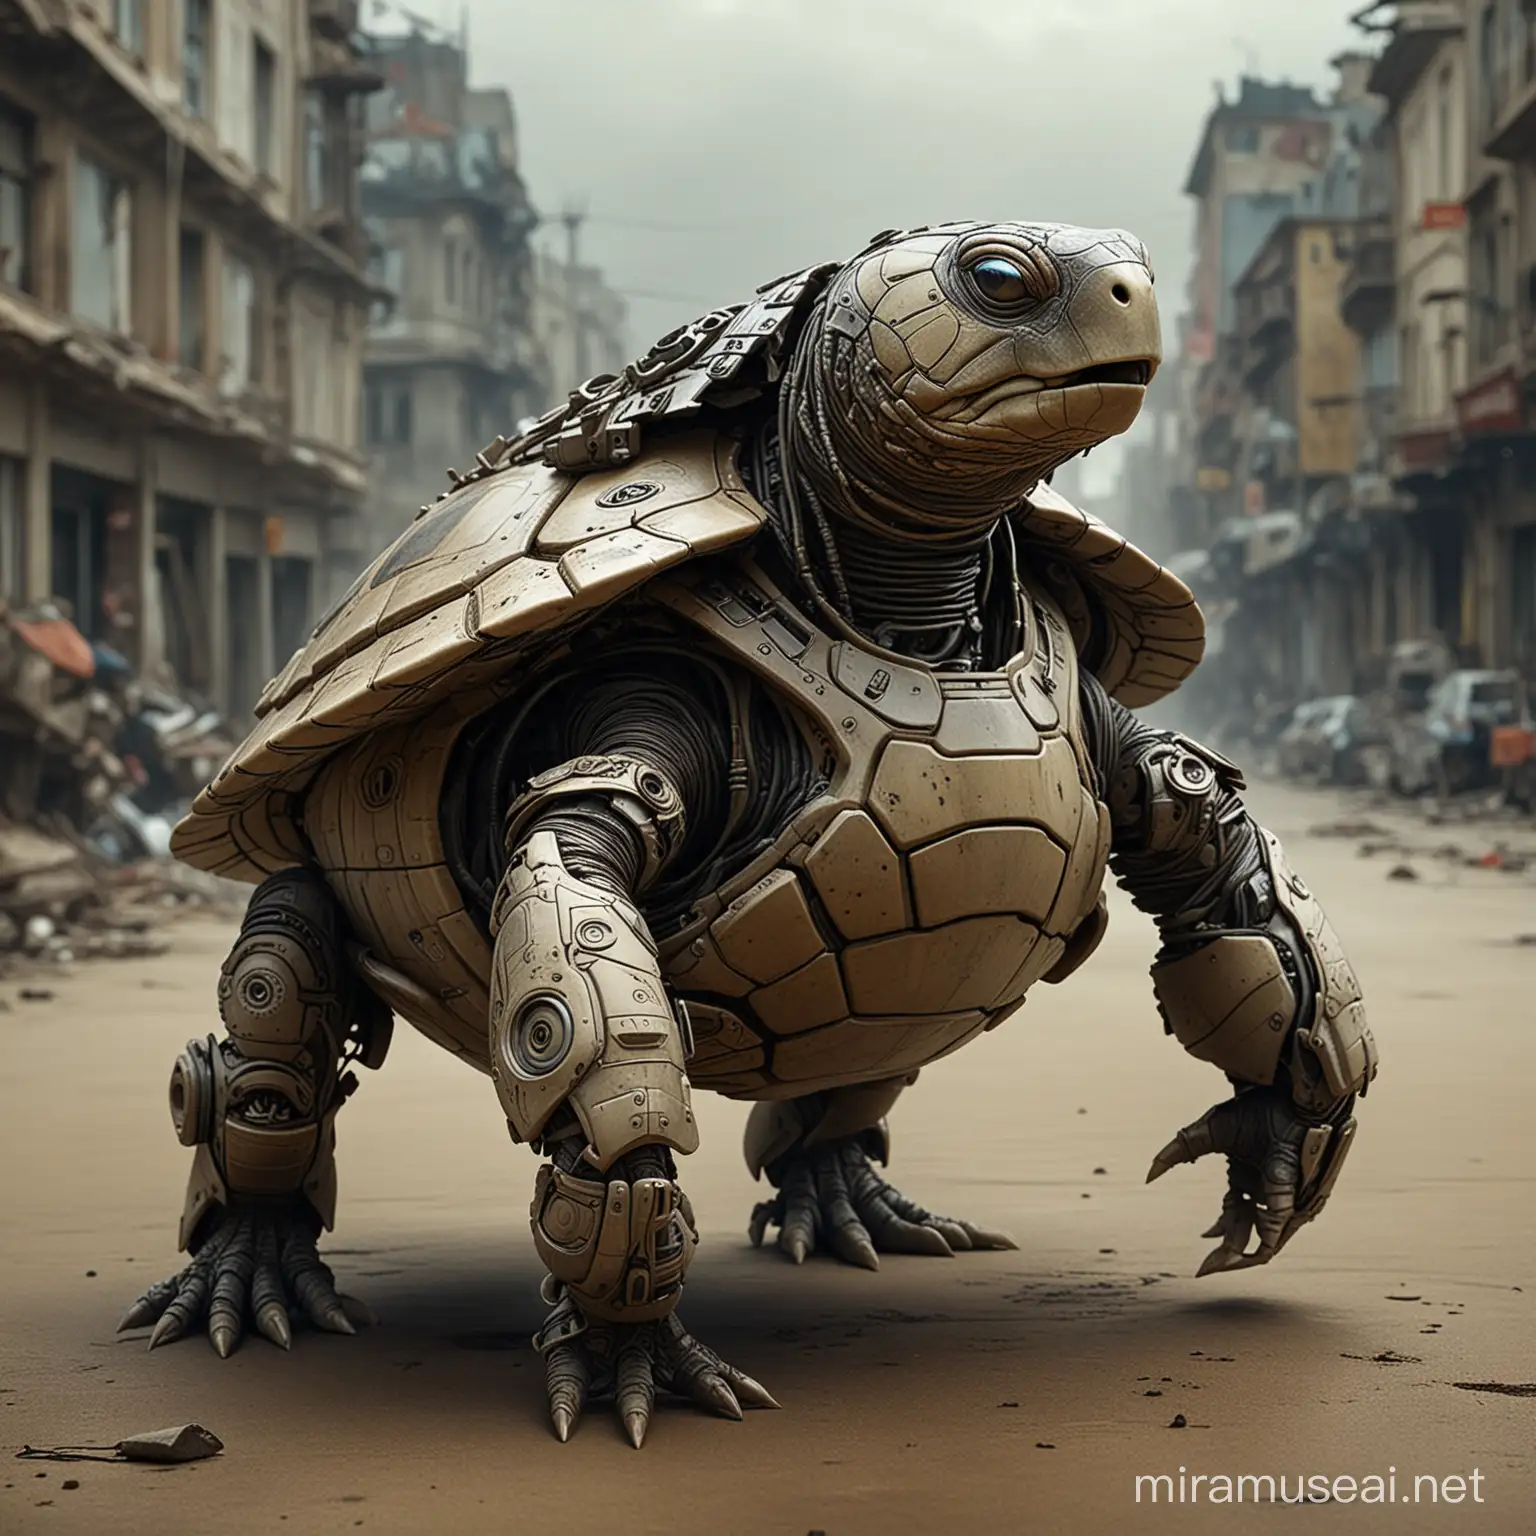 Futuristic Cyborg Turtle in Alien Landscape Inspired by Peter Grics Art